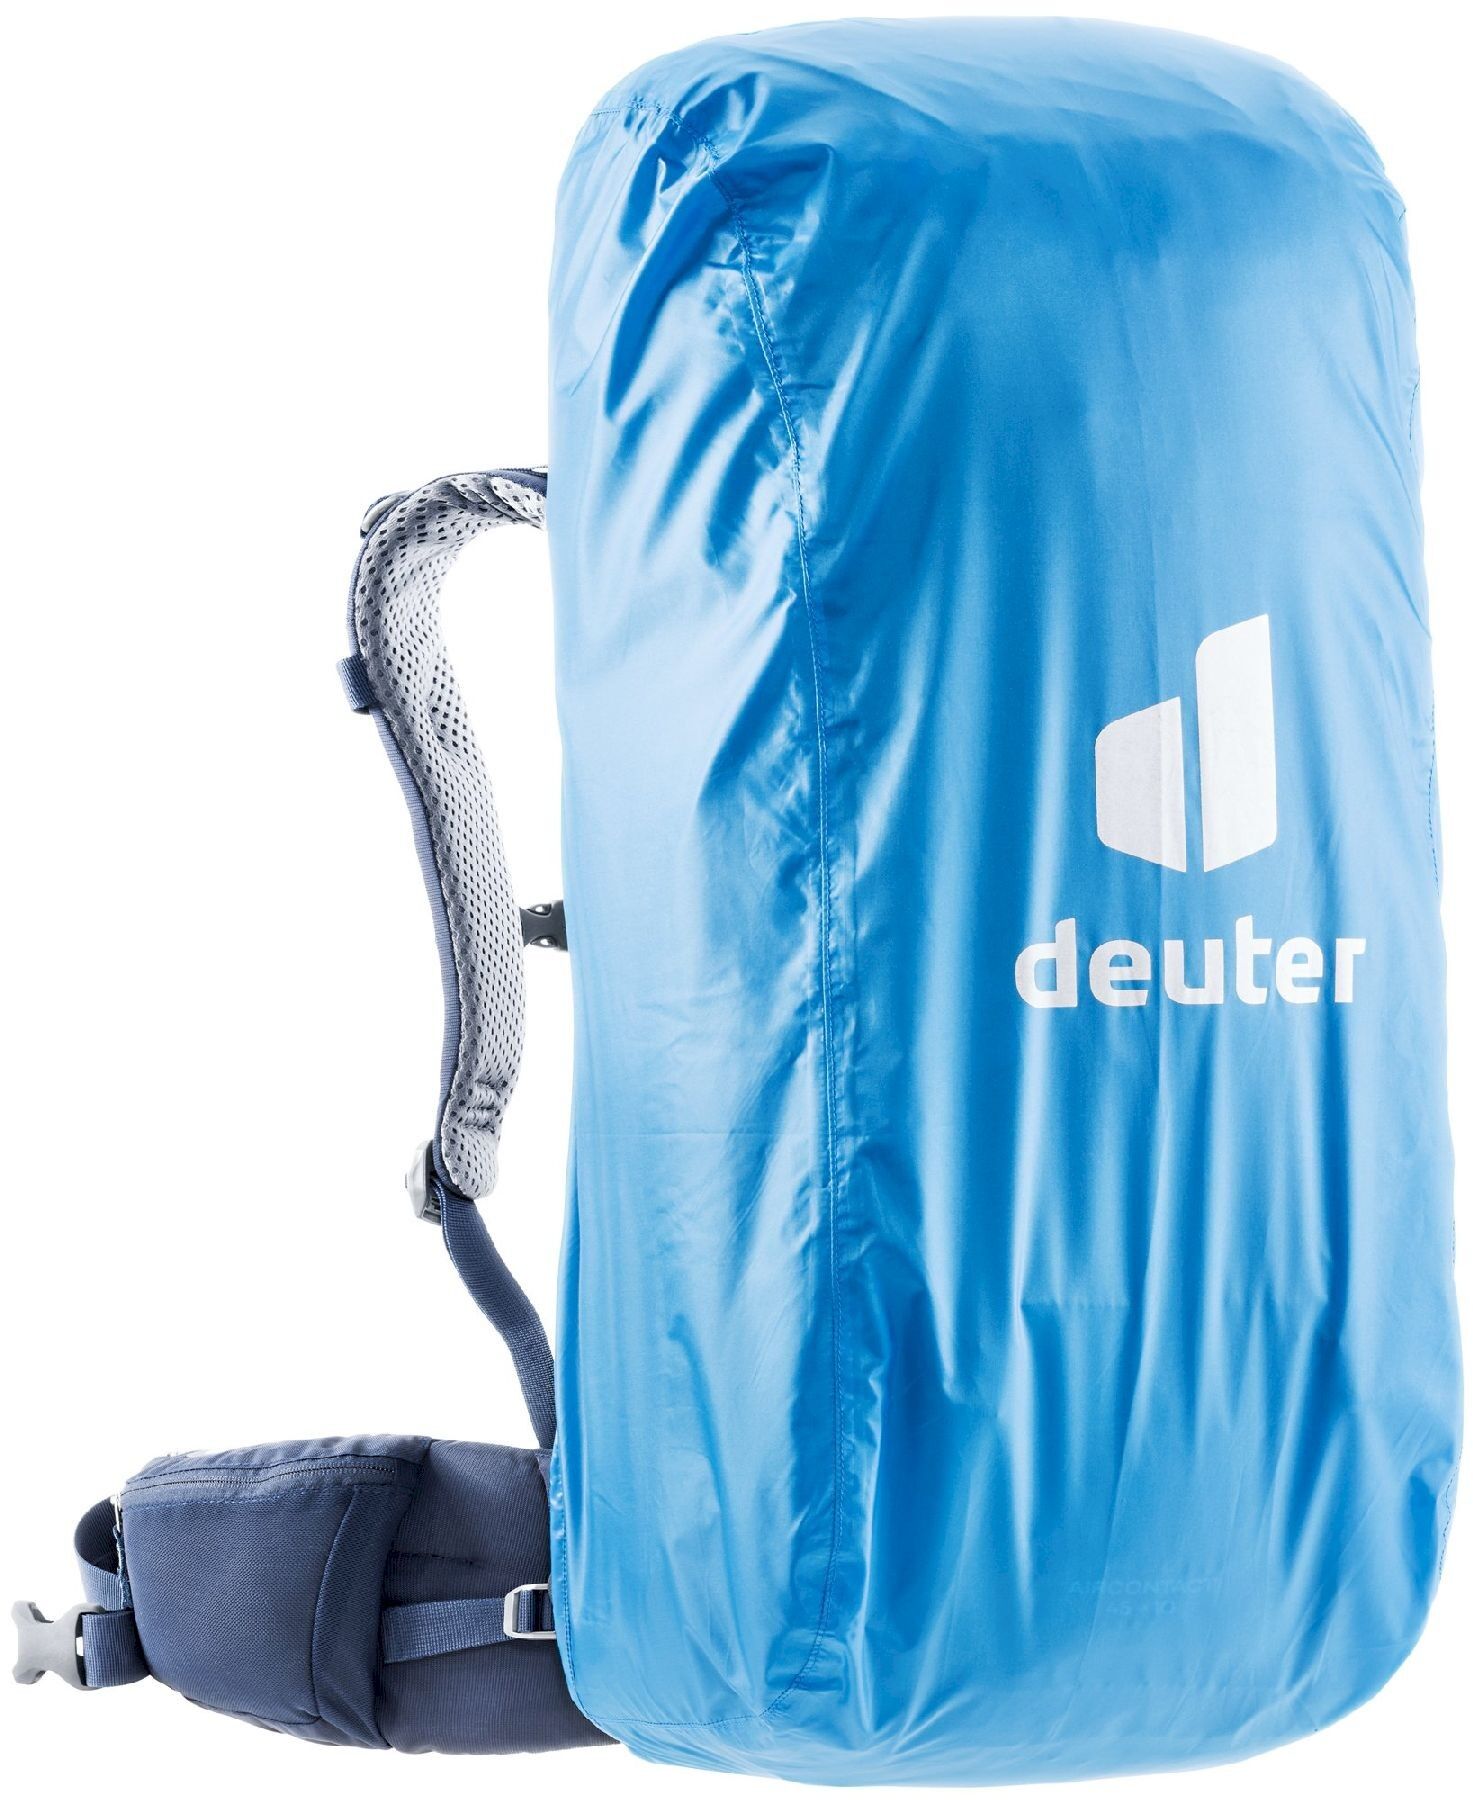 Deuter Raincover II - Pokrowiec przeciwdeszczowy na plecak | Hardloop